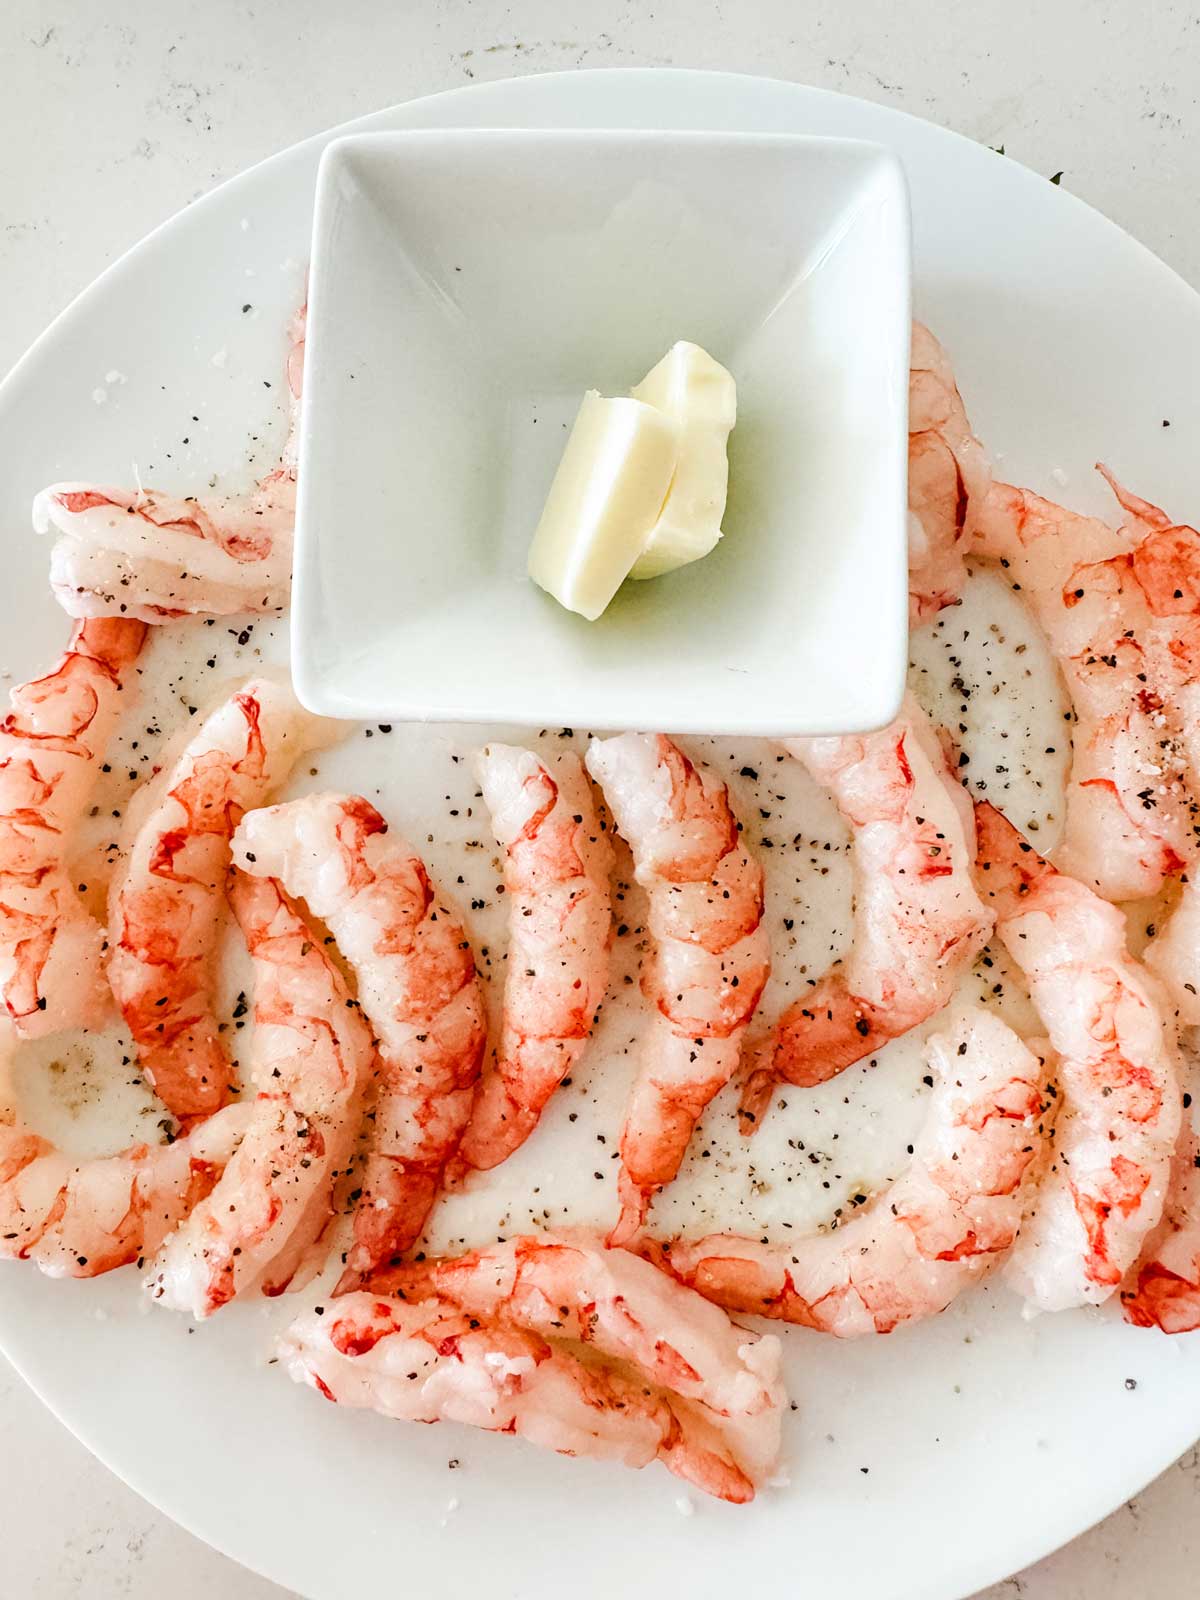 Overhead photo of a white plate with seasoned shrimp.